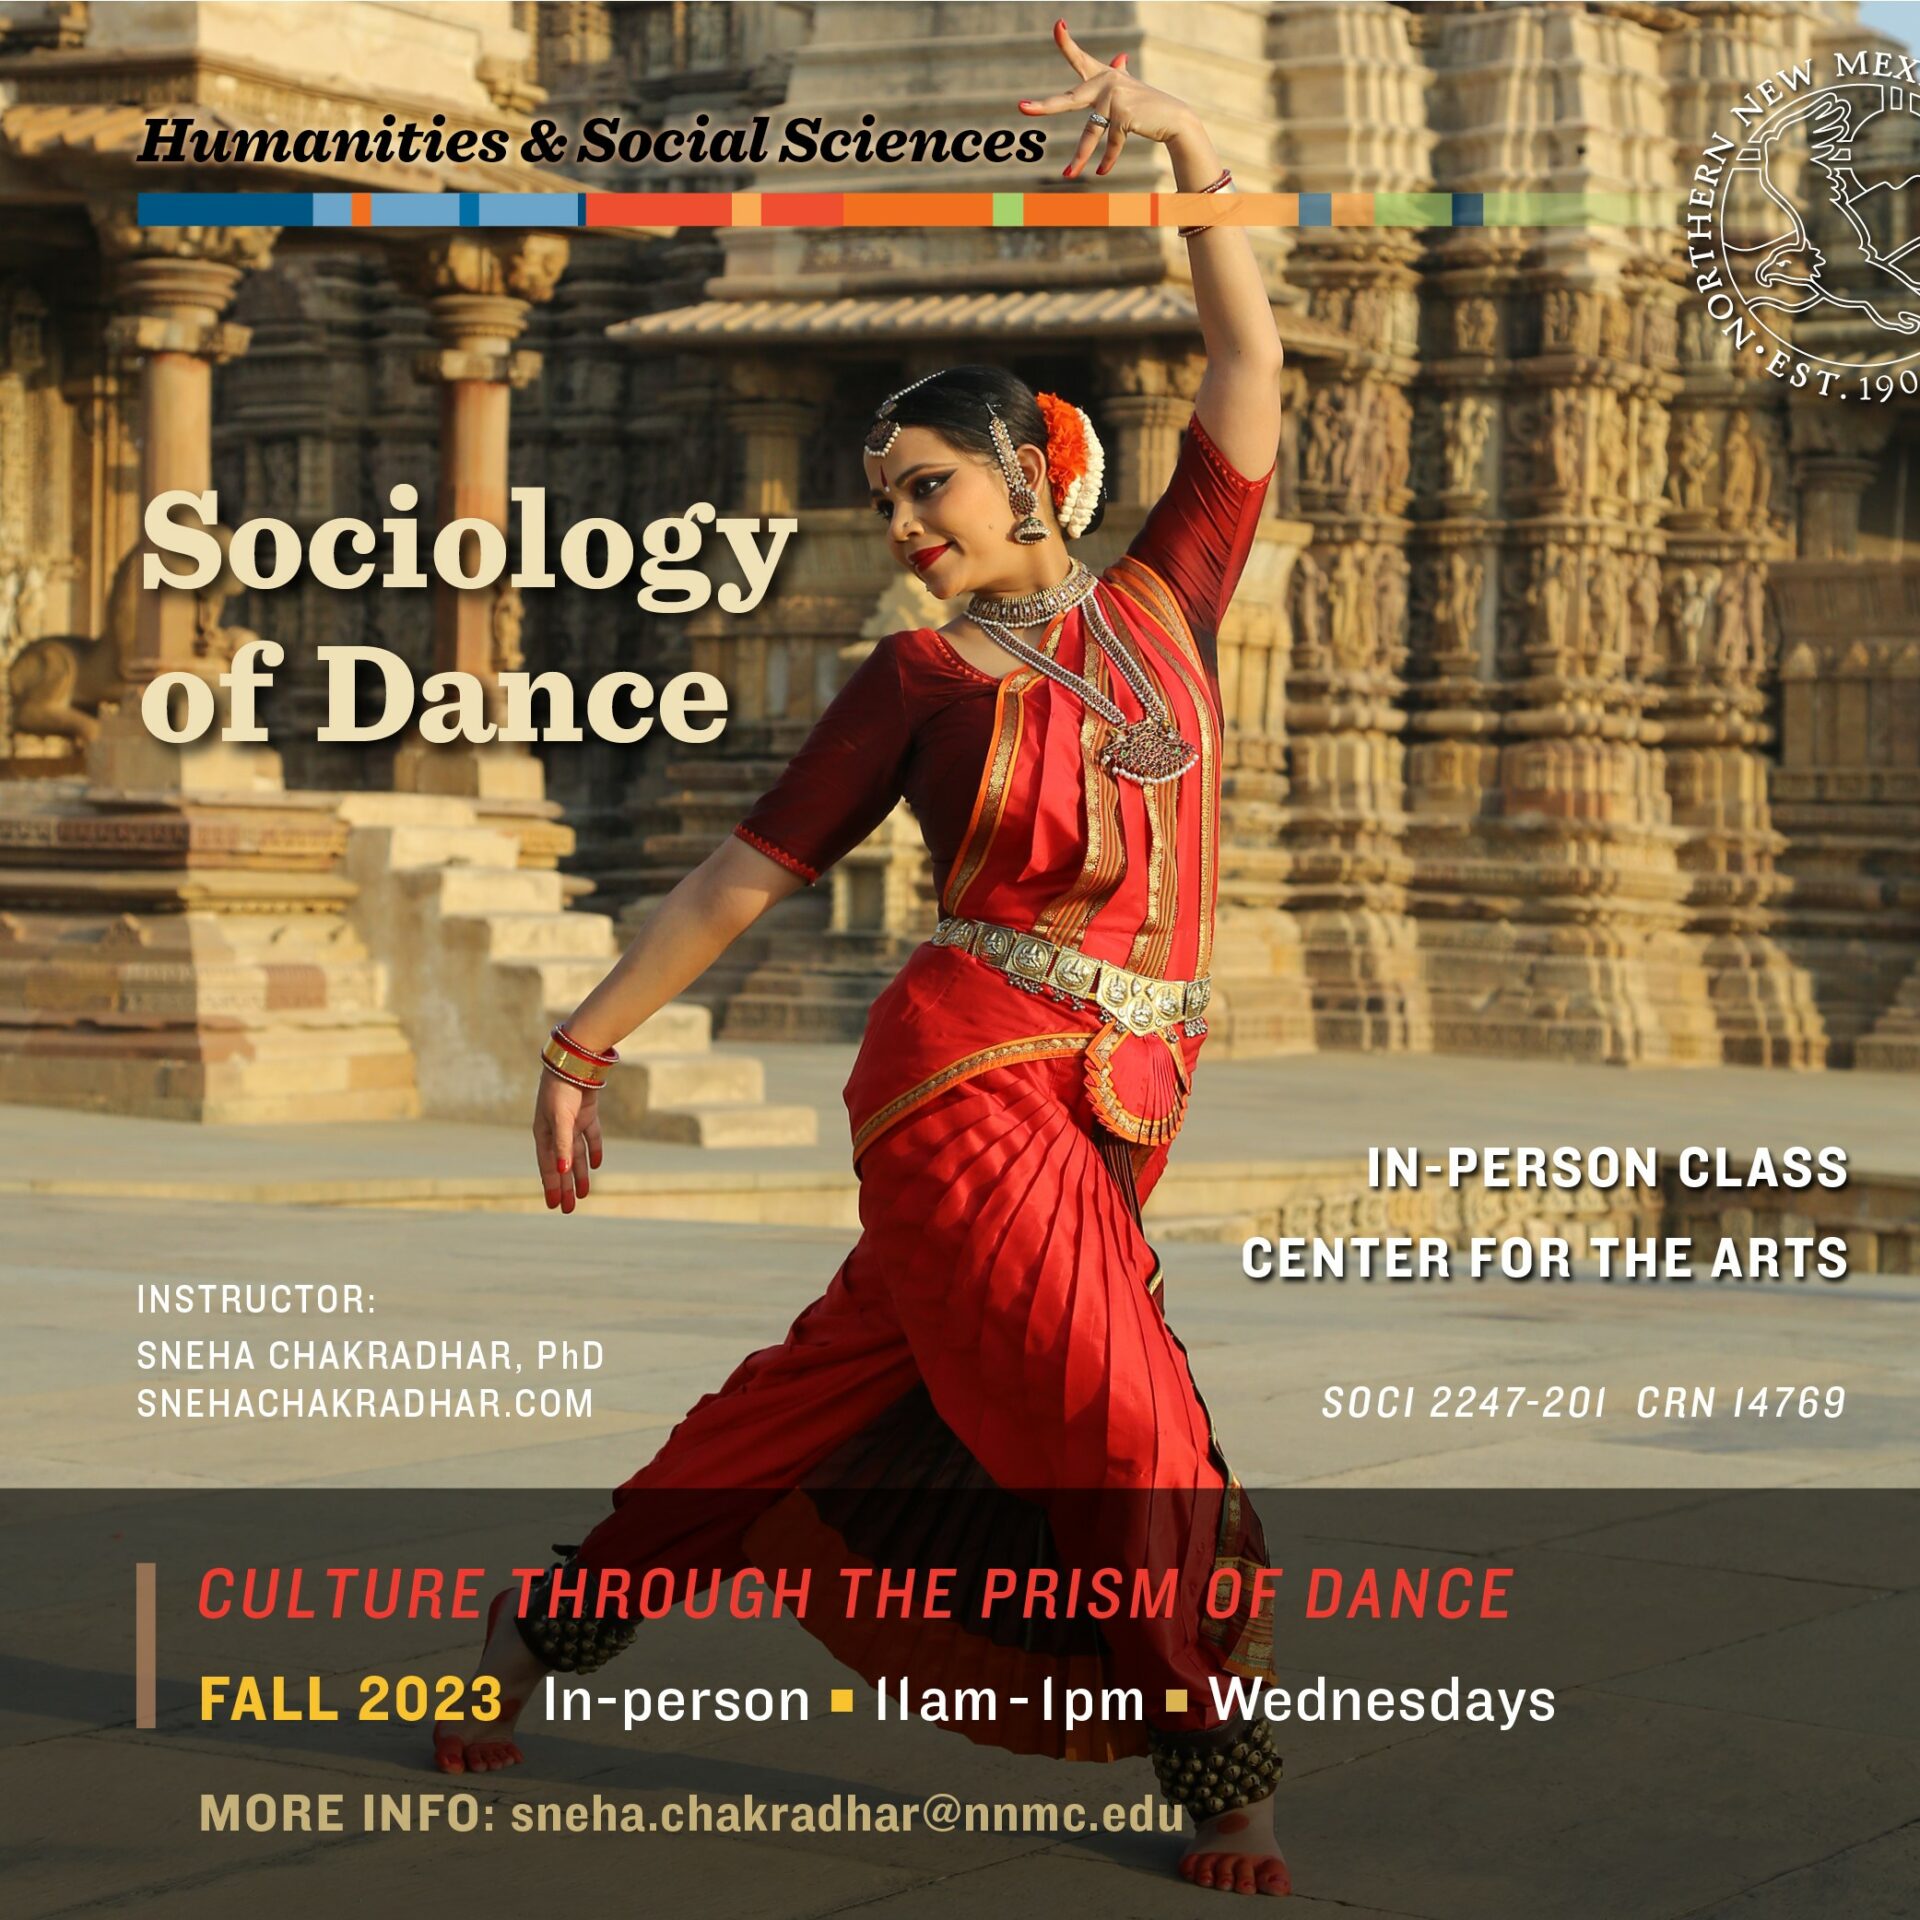 Announcing Bharatanatyam Classes in Santa Fe